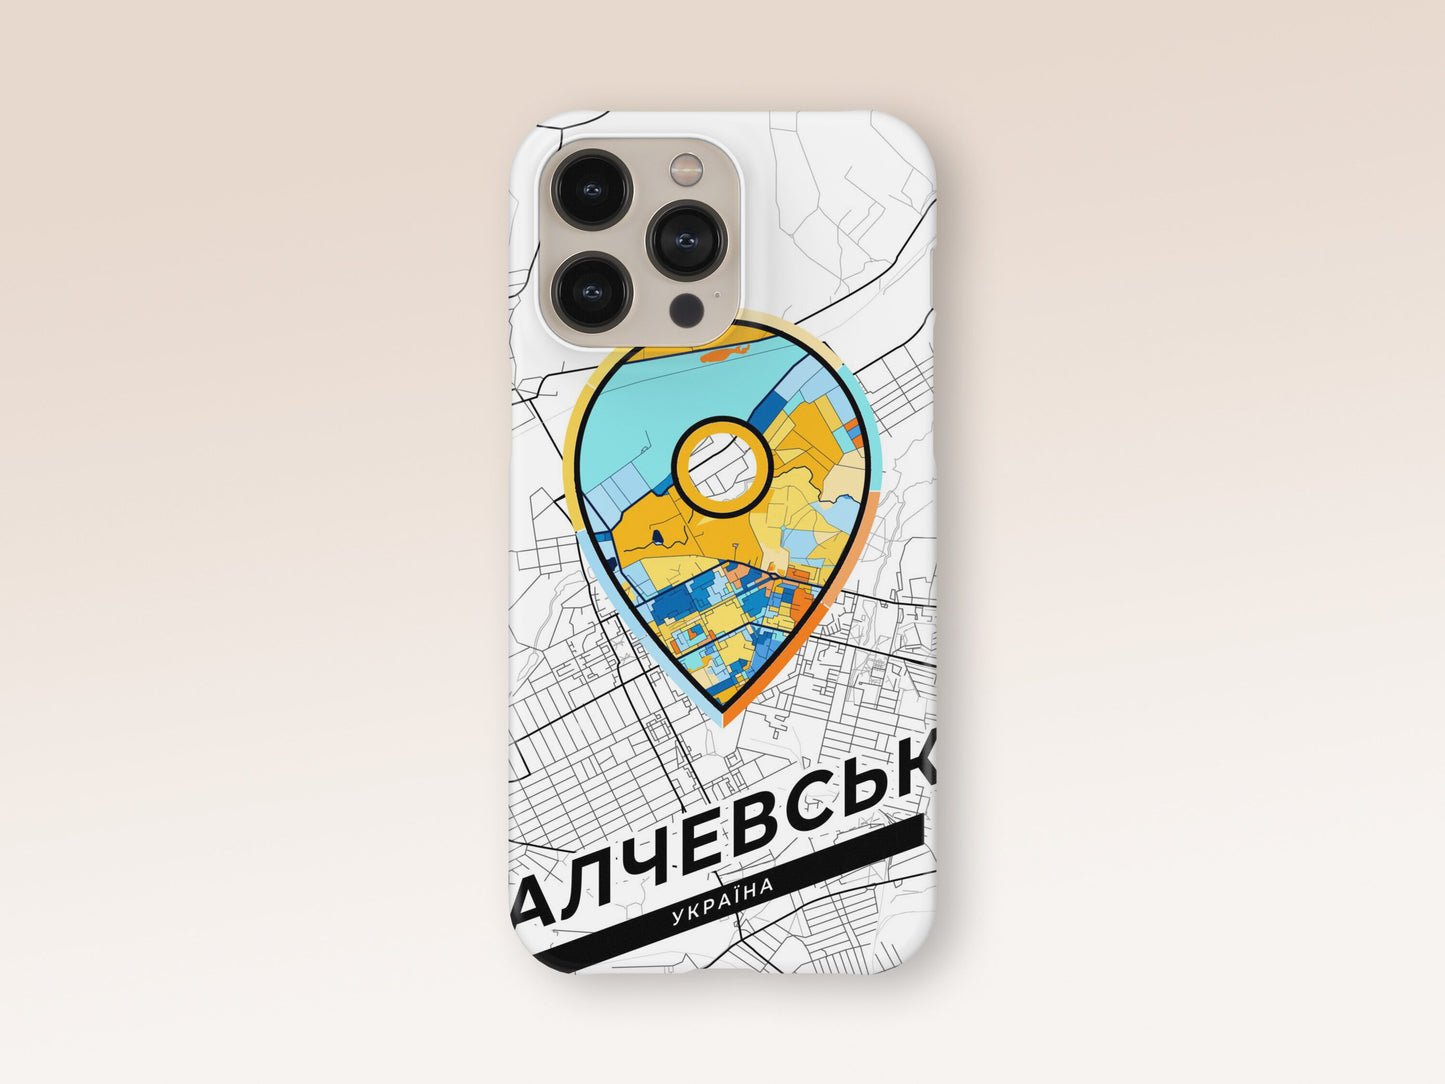 Alchevsk Ukraine slim phone case with colorful icon. Birthday, wedding or housewarming gift. Couple match cases. 1